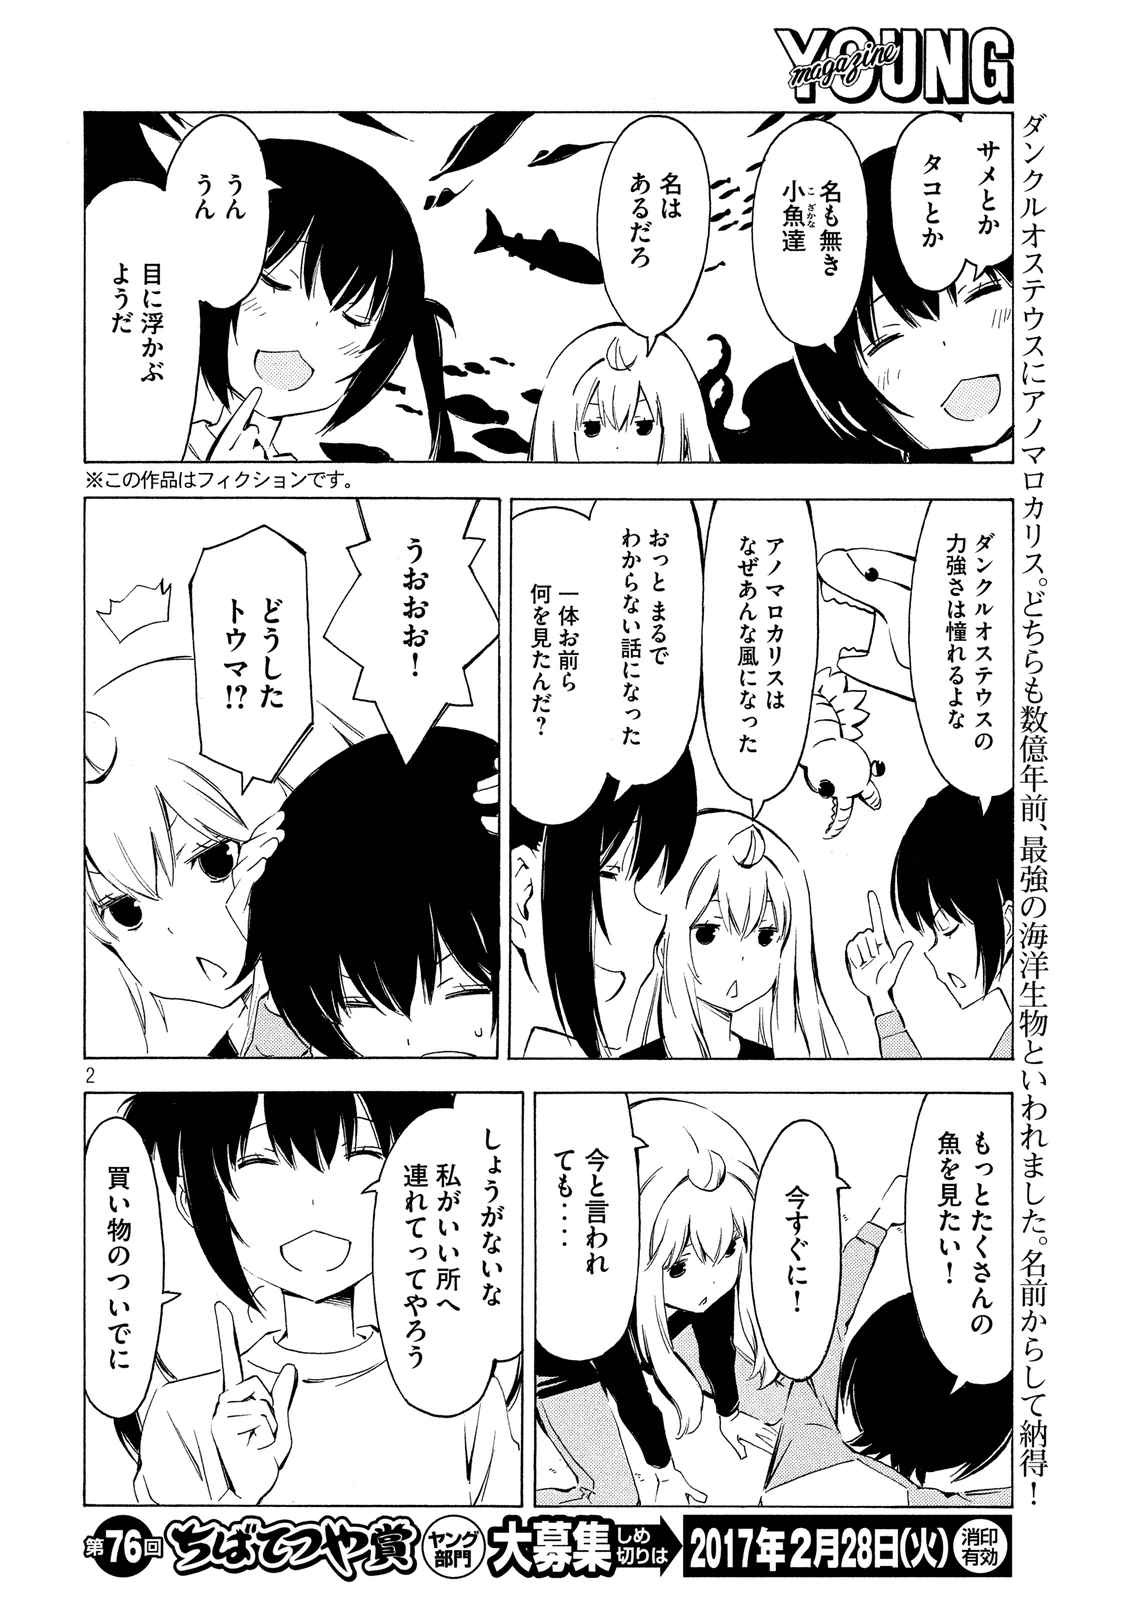 Minami-ke - Chapter 306 - Page 2